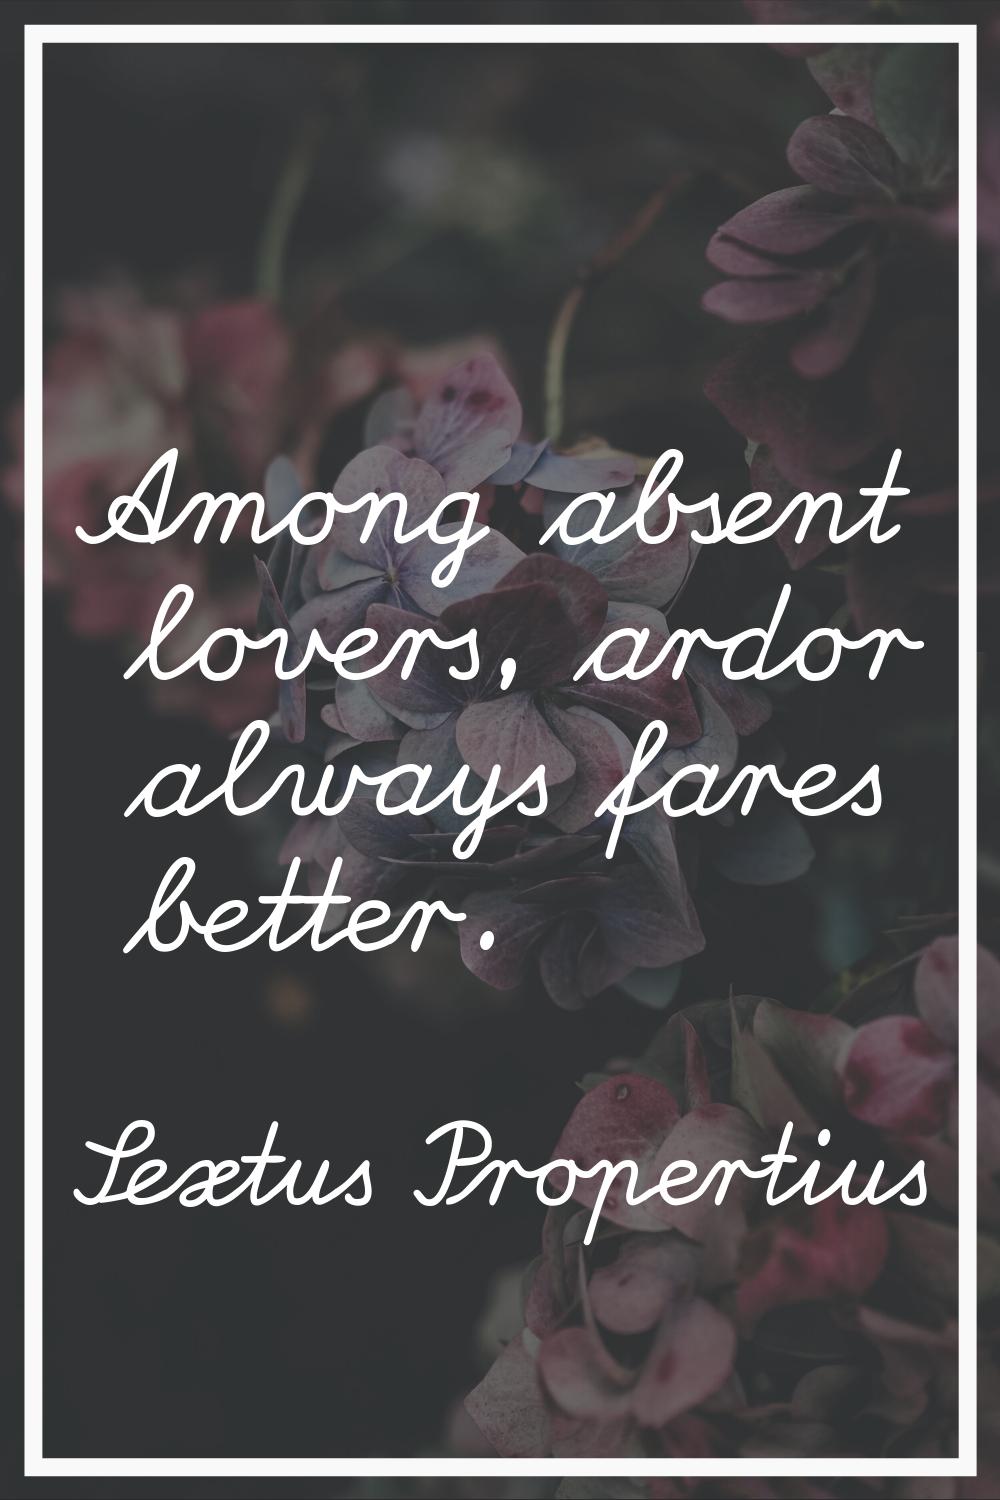 Among absent lovers, ardor always fares better.